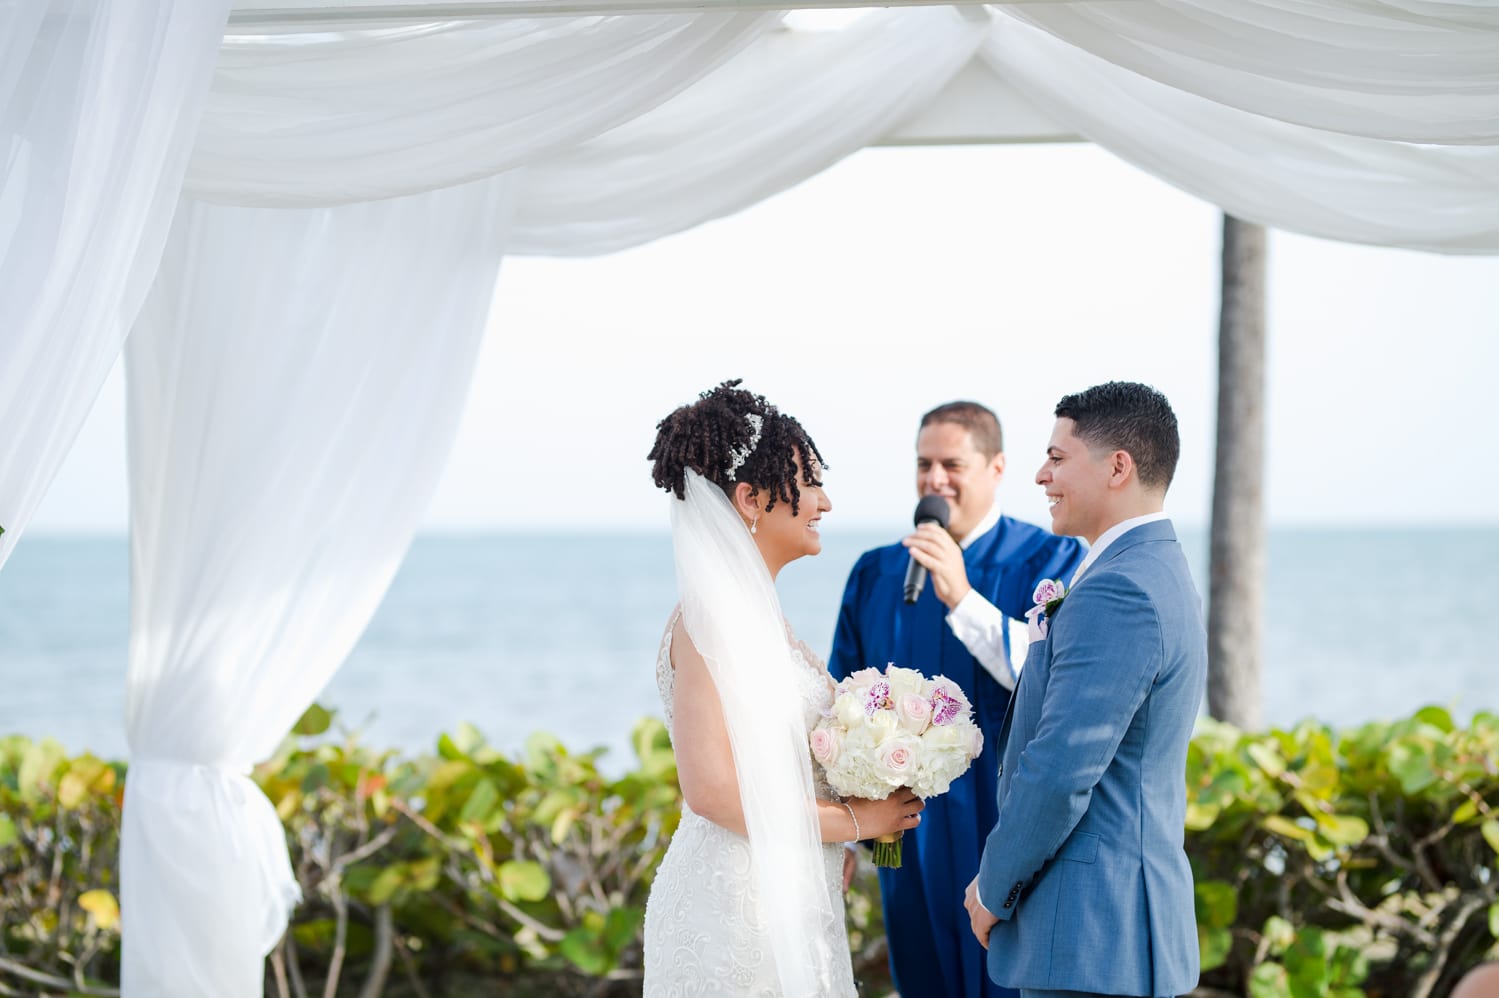 Destination wedding at Copamarina Beach Resort by Puerto Rico photographer Camille Fontanez